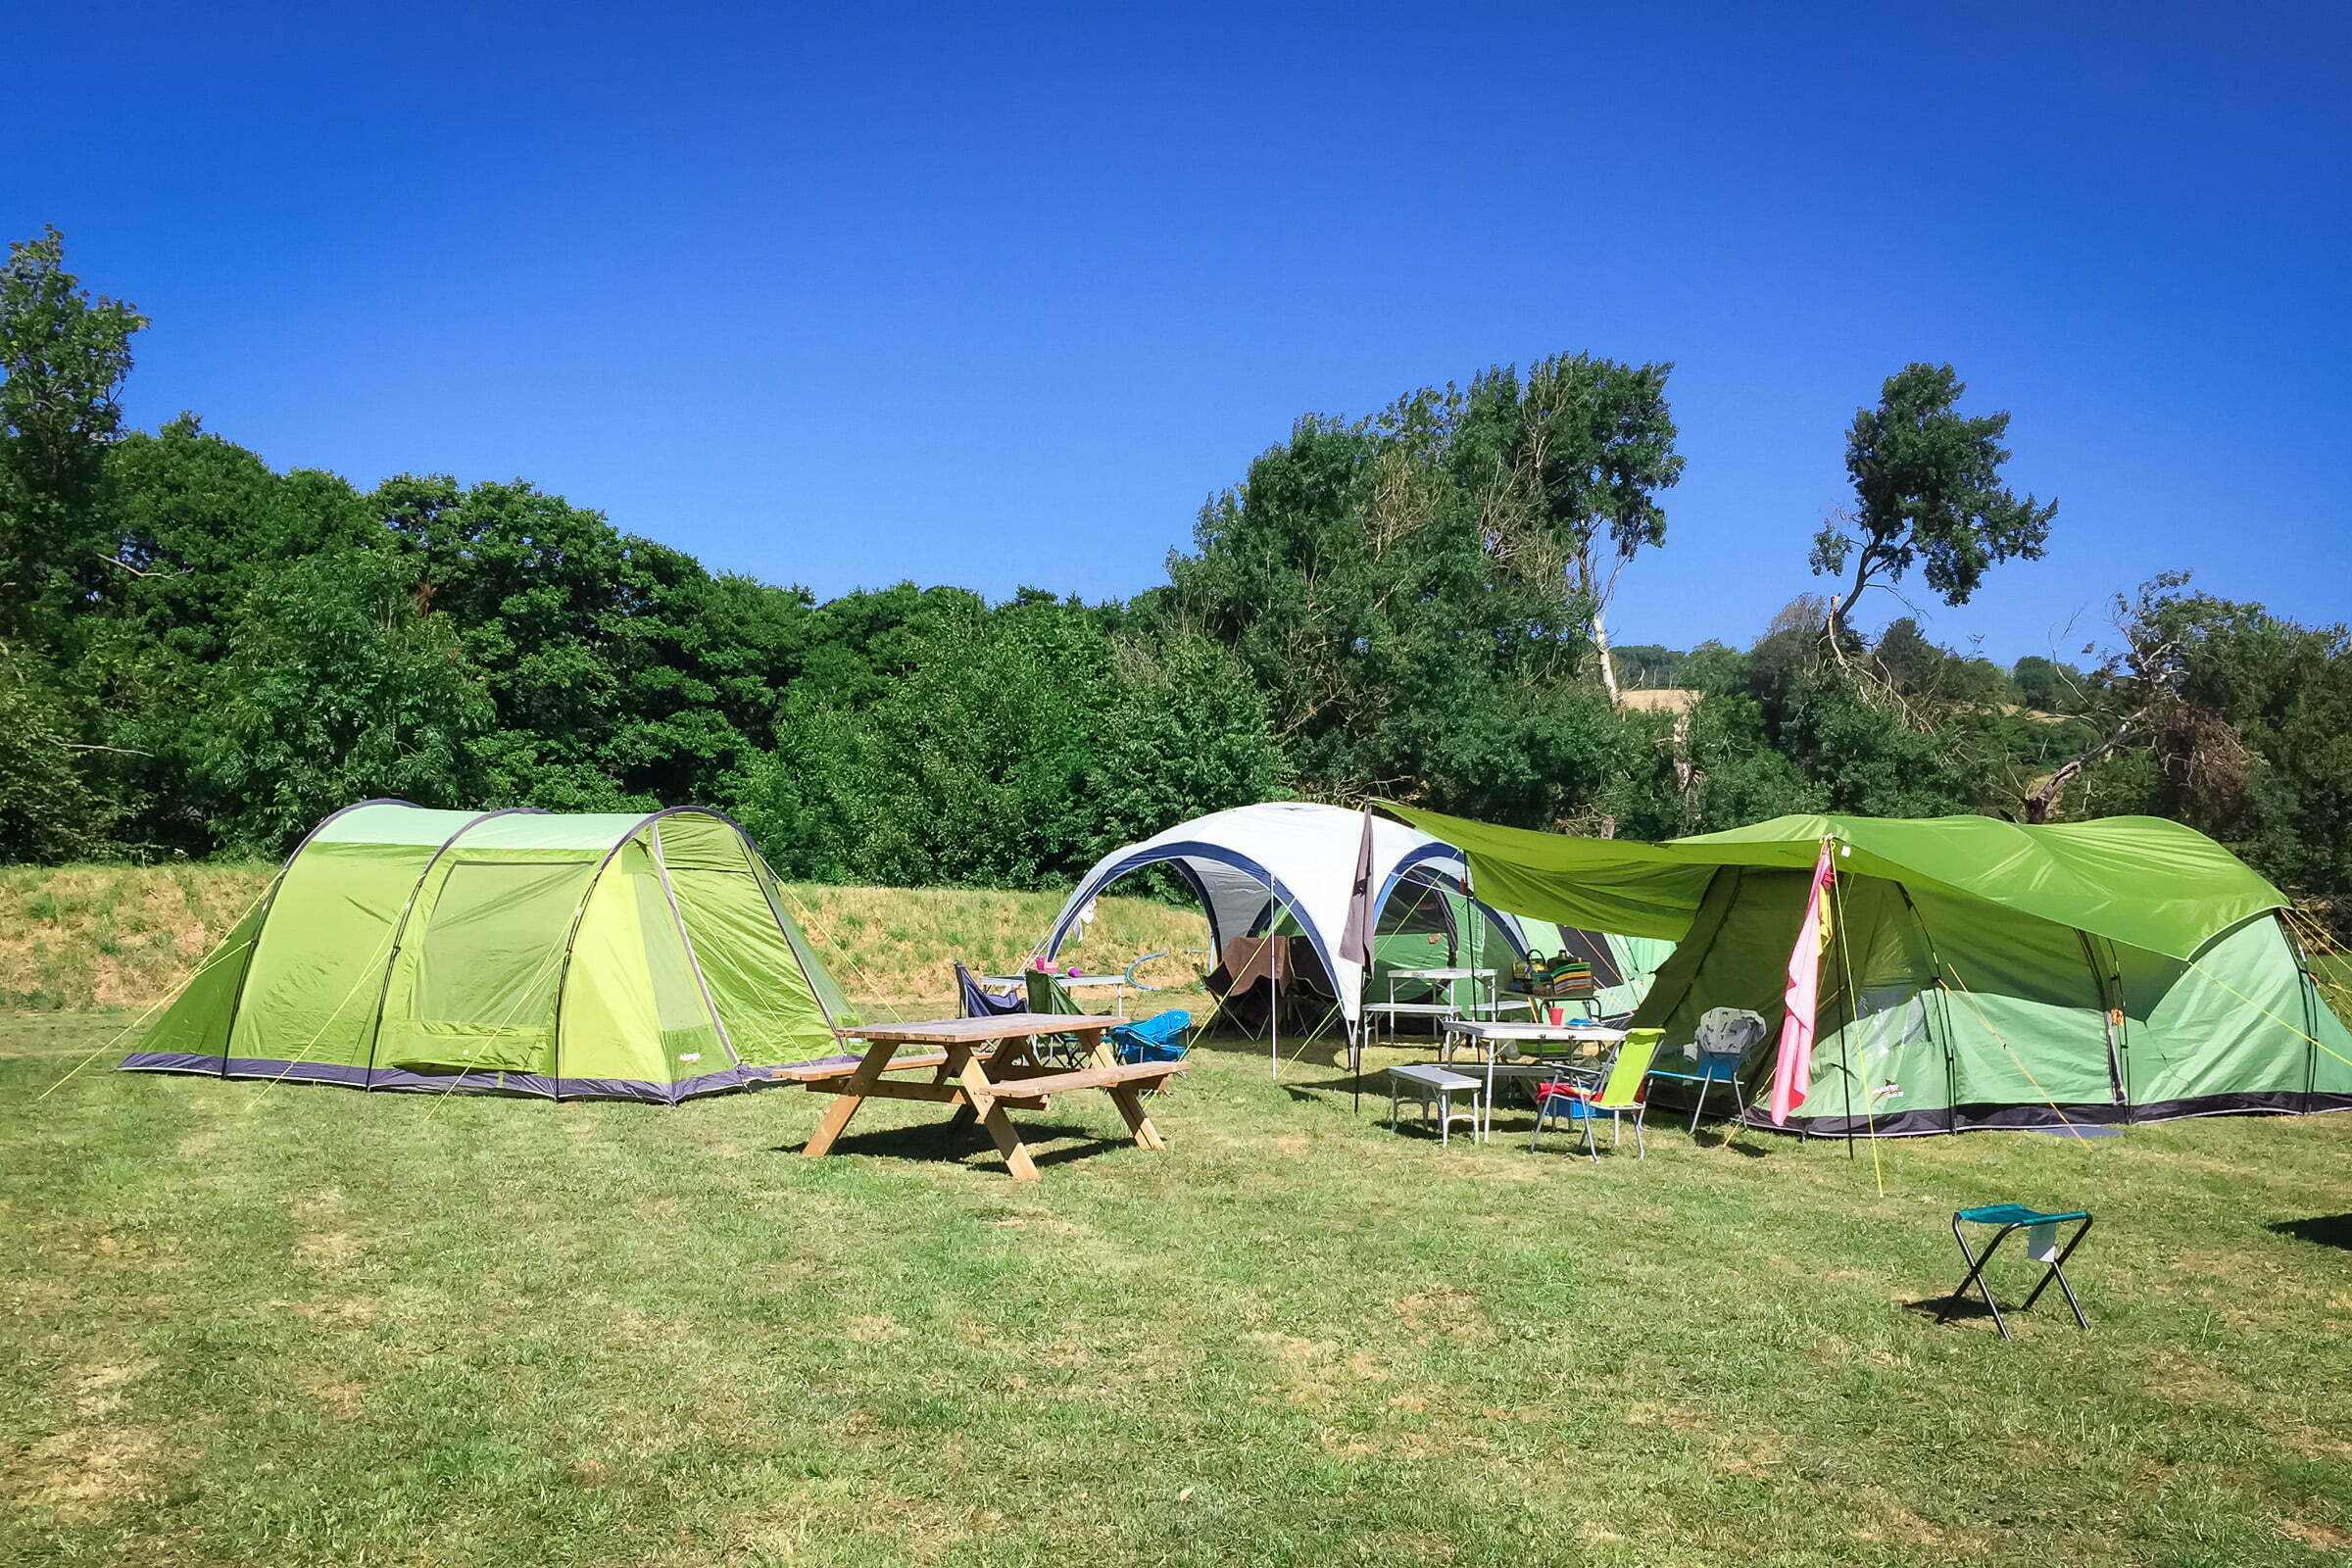 Painswick Glamping – Nice camping setup